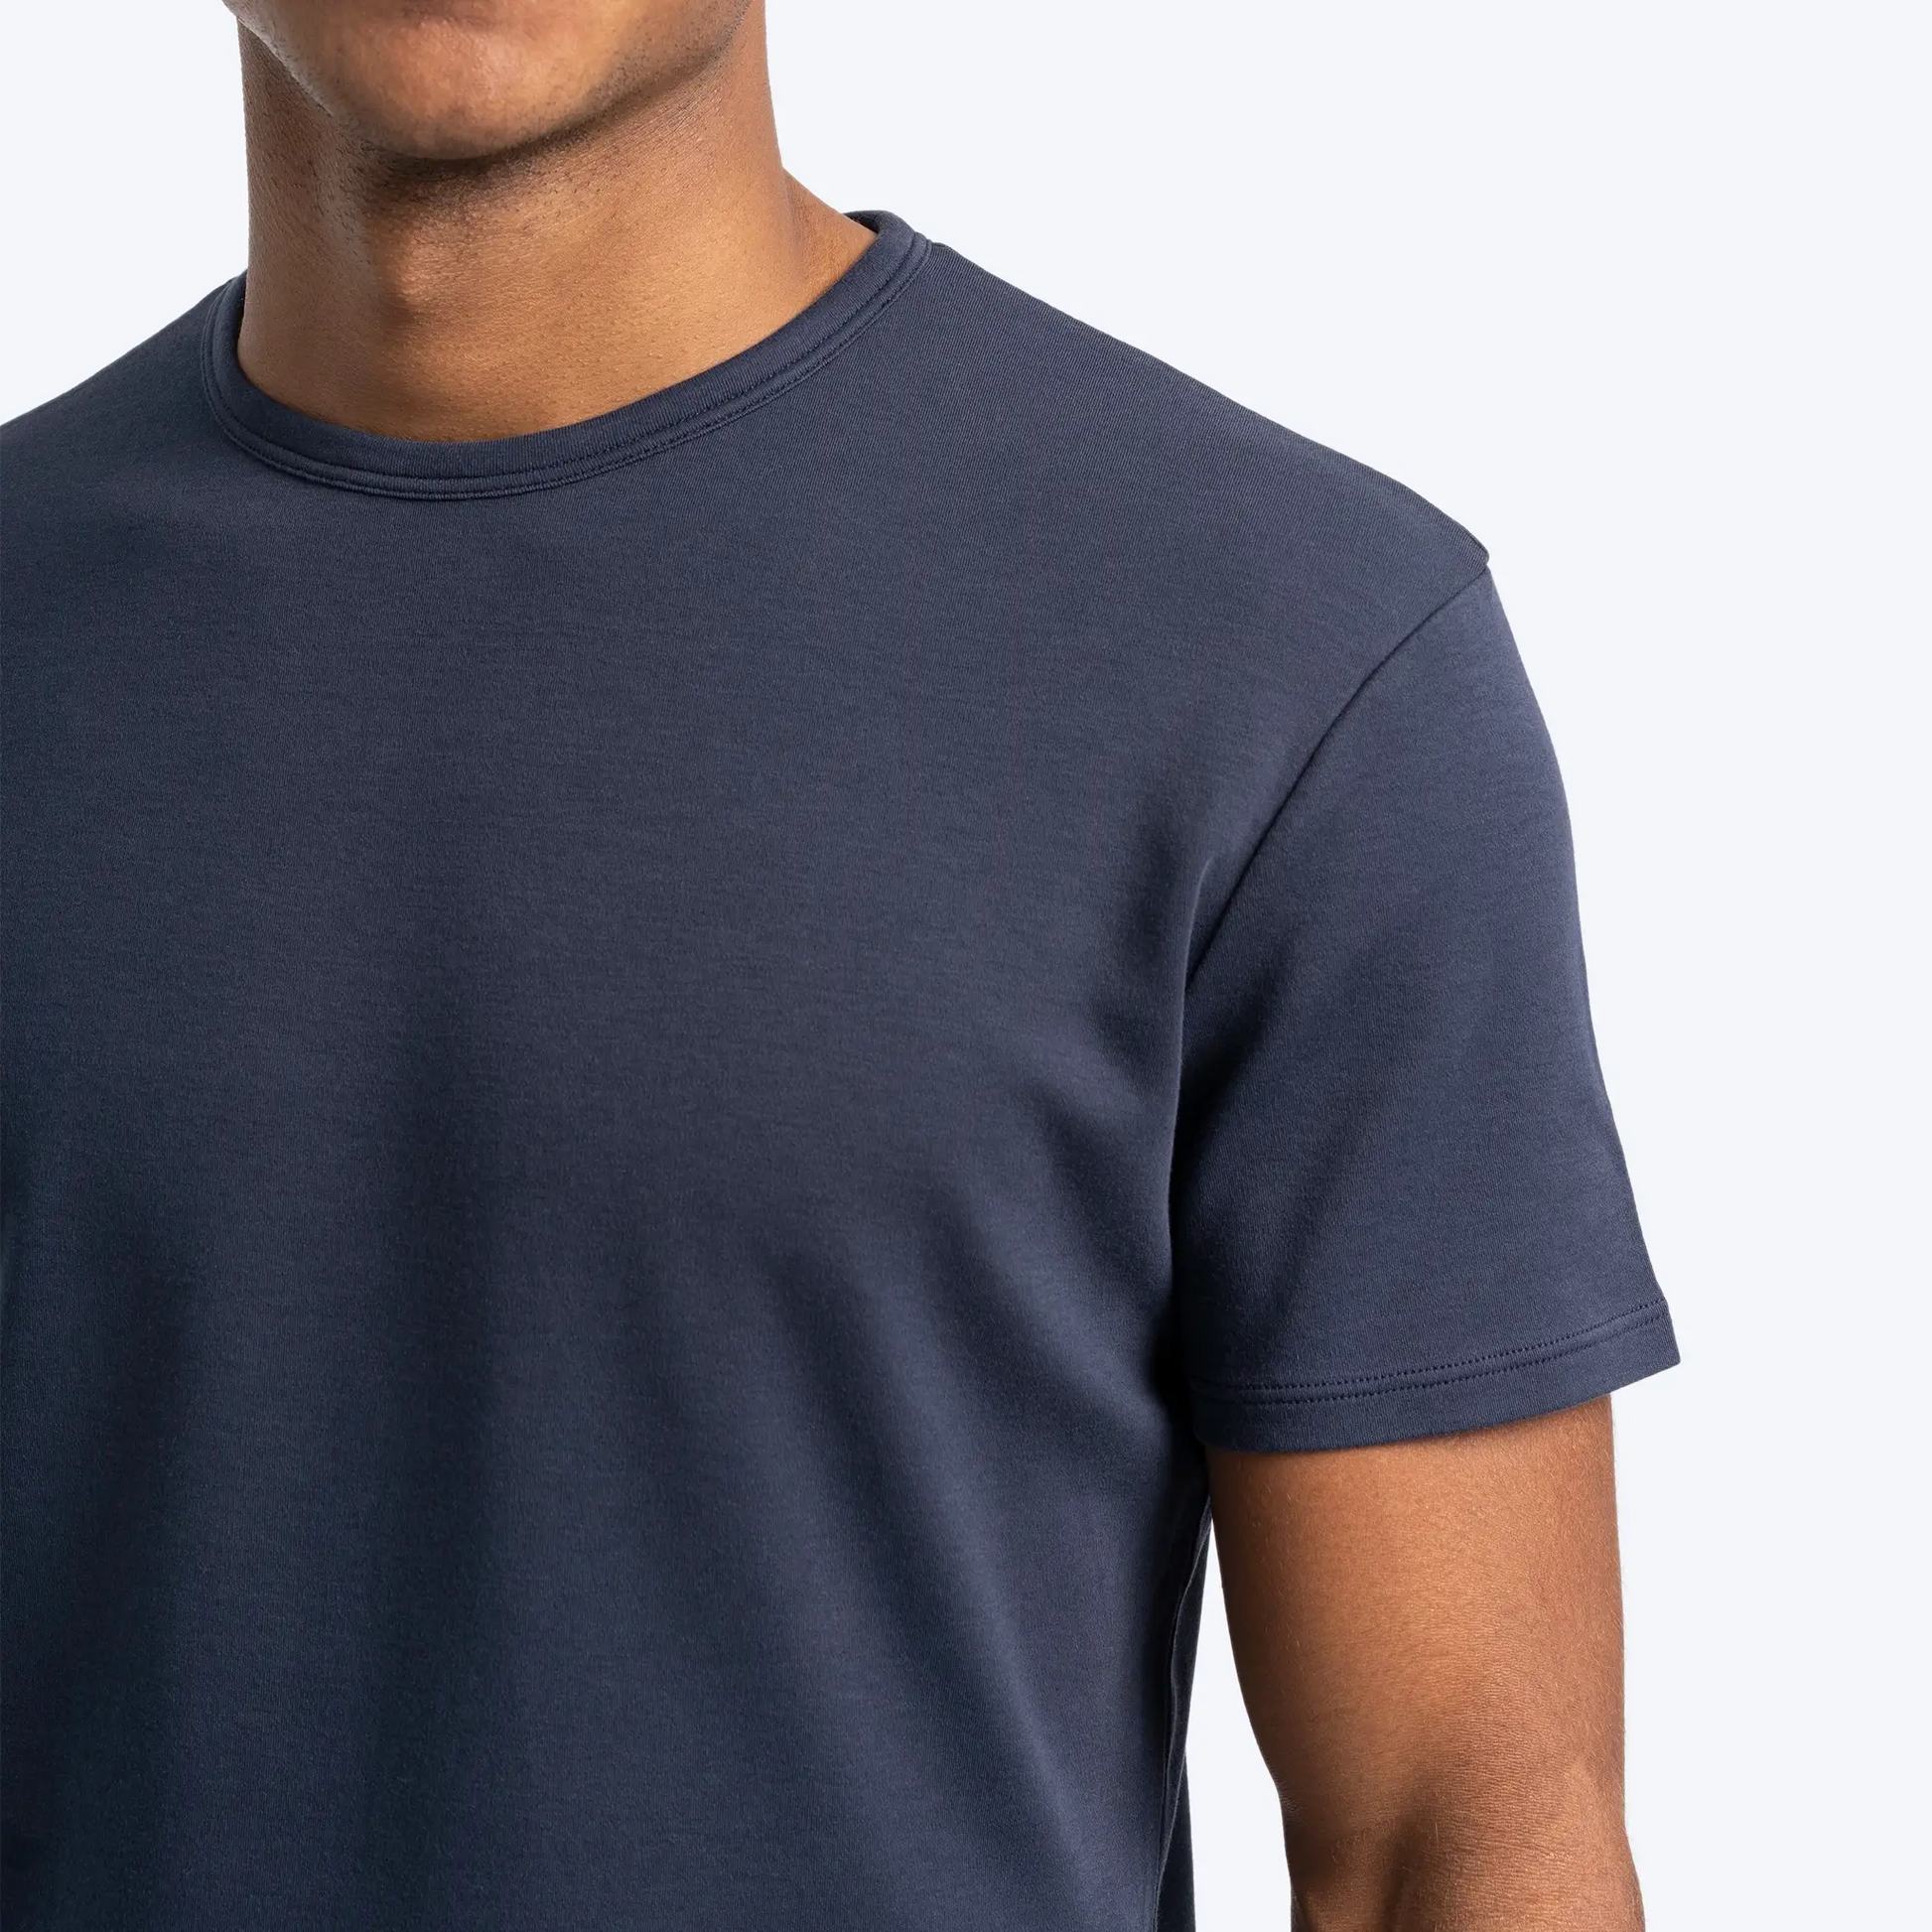 mens 100 cotton tshirt crew neck color navy blue